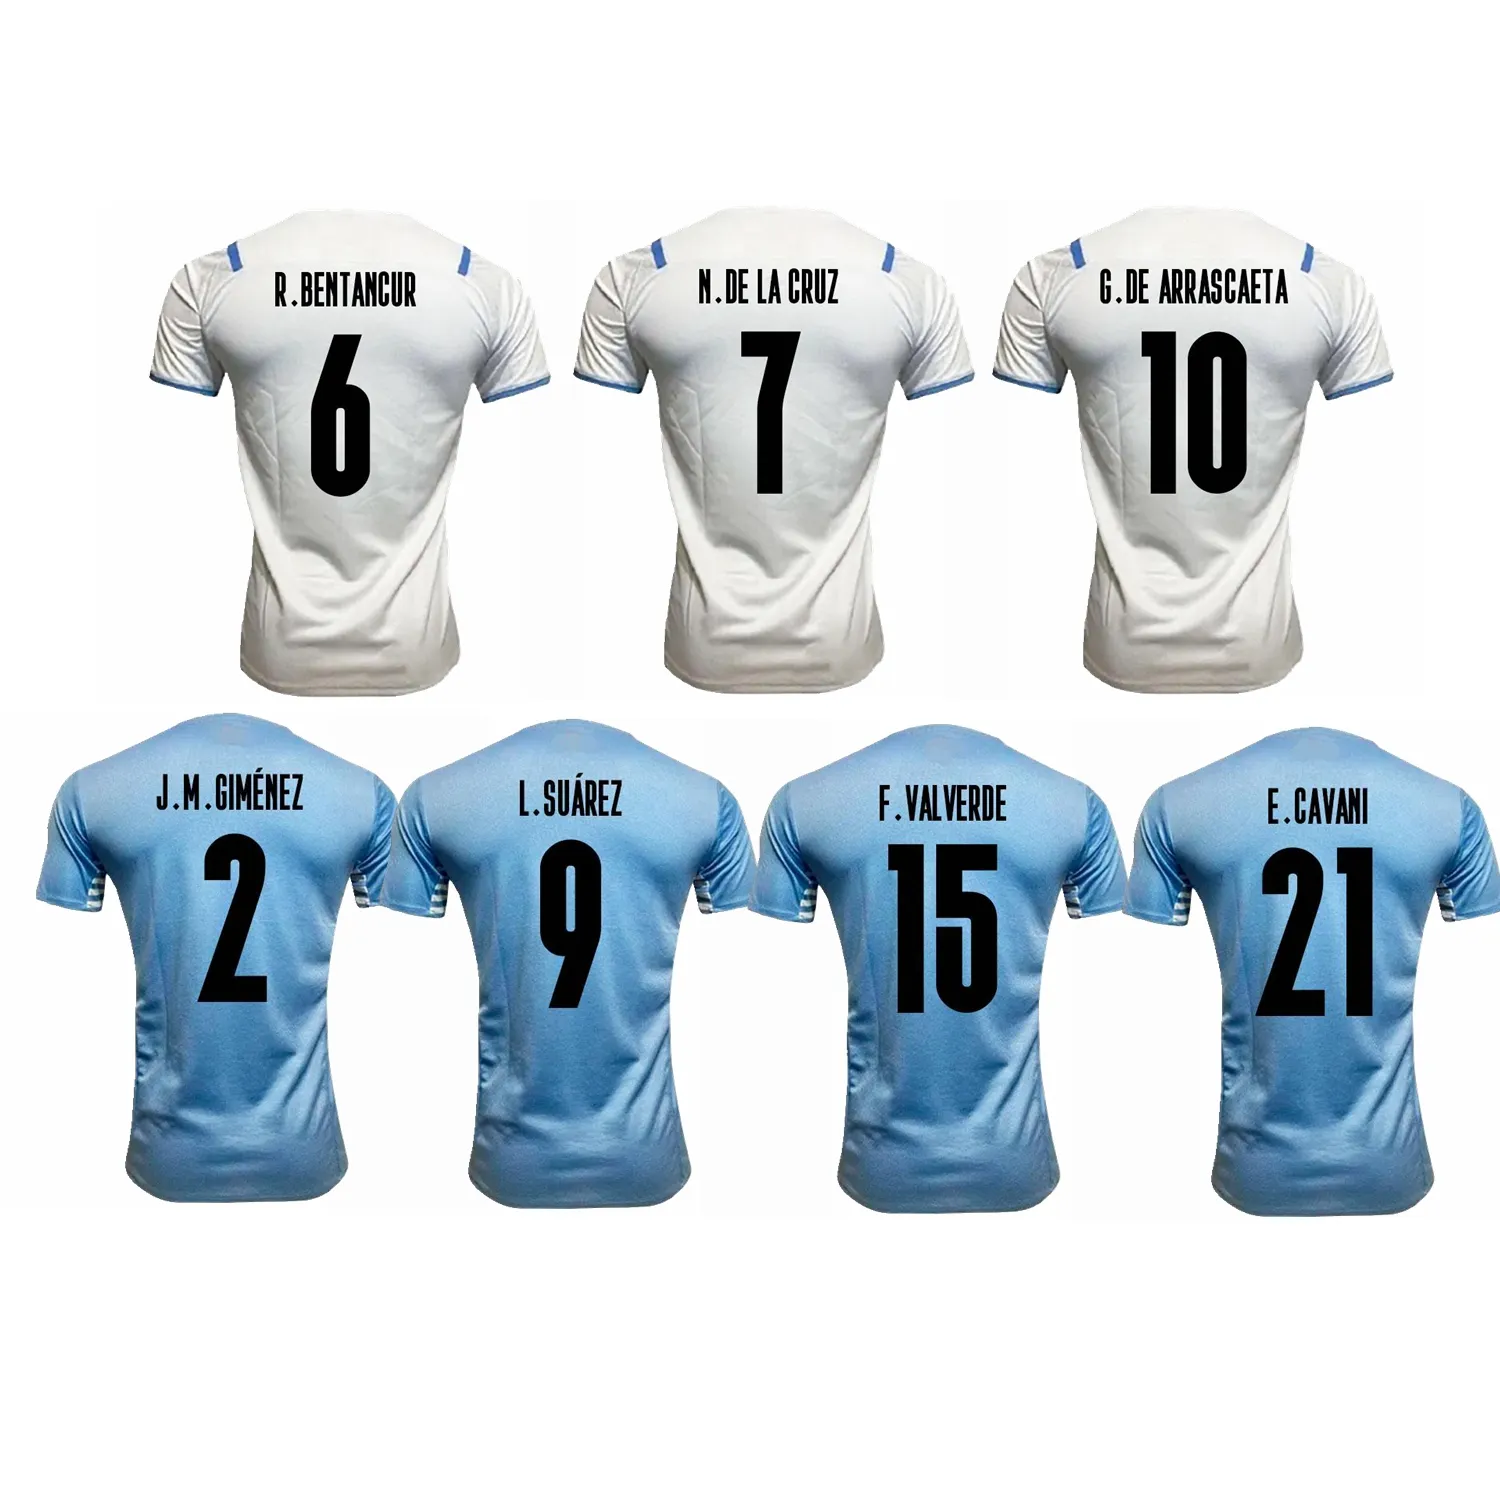 Uruguay Suarez Cavani Voetbalshirts 2021 22 Valverde Arrascaeta Thuis Weg Voetbal Shirt Kit